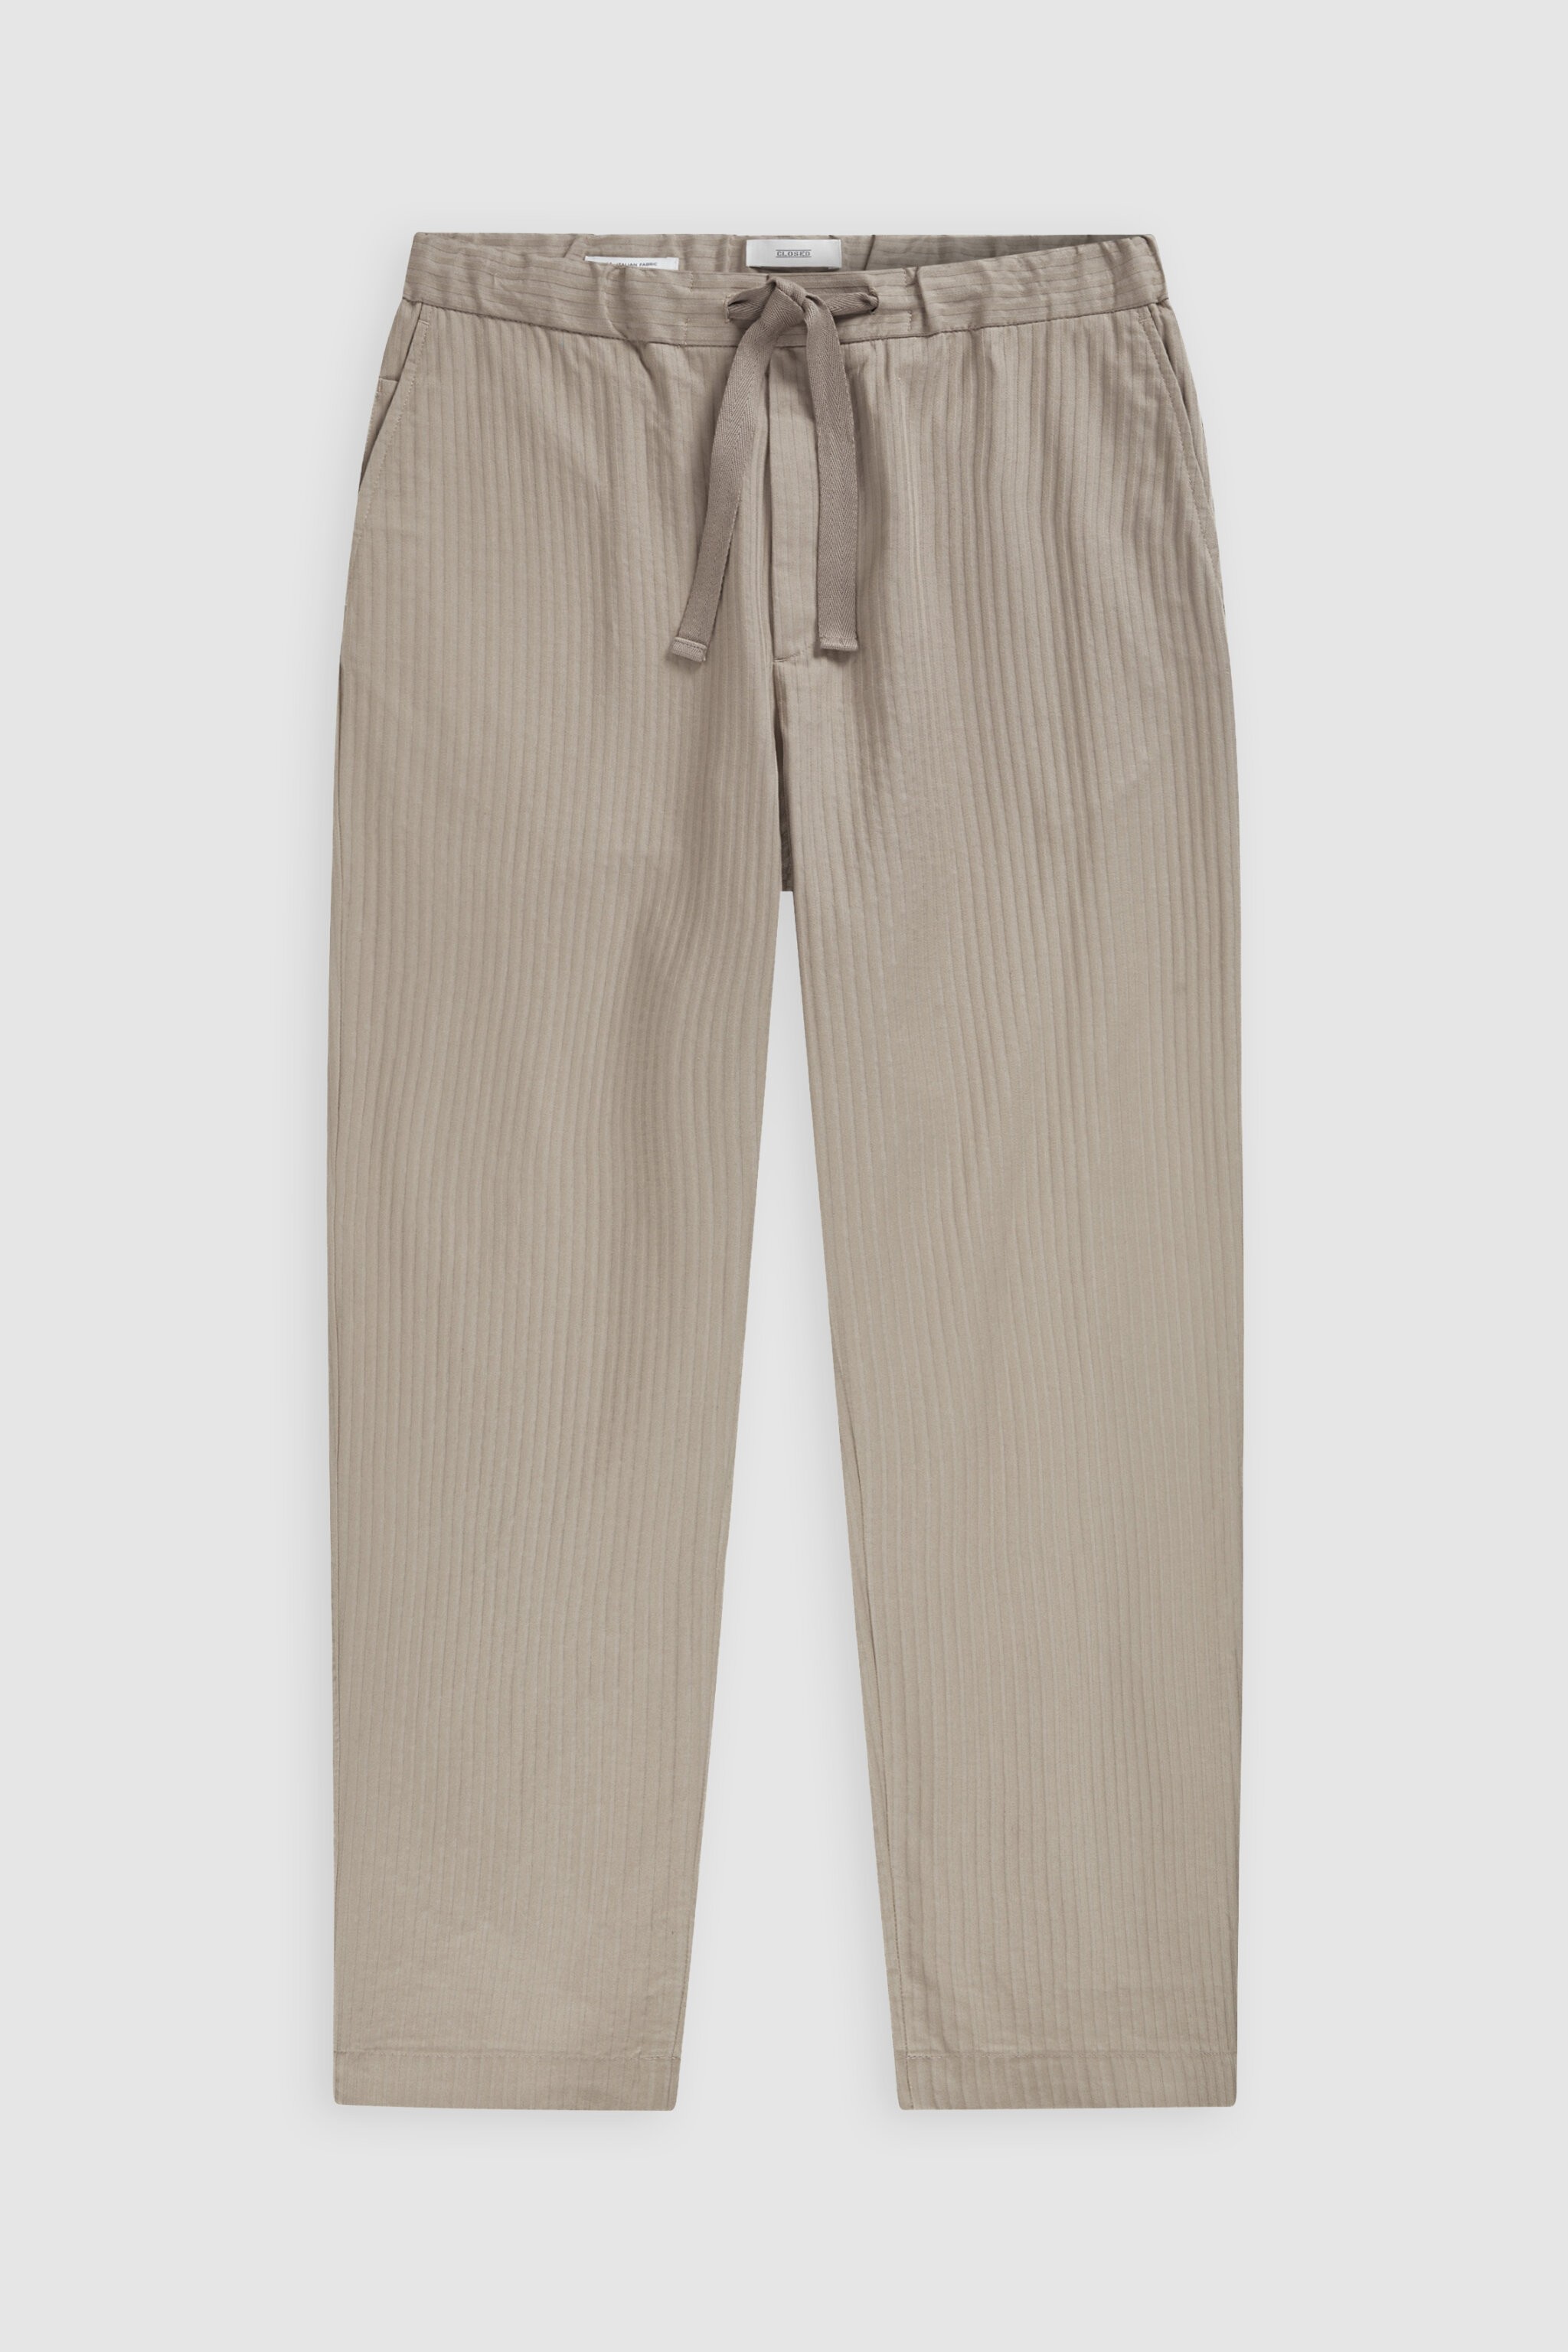 closed-pantalon-nanaimo-straight-coupe-droite-grey-veneer